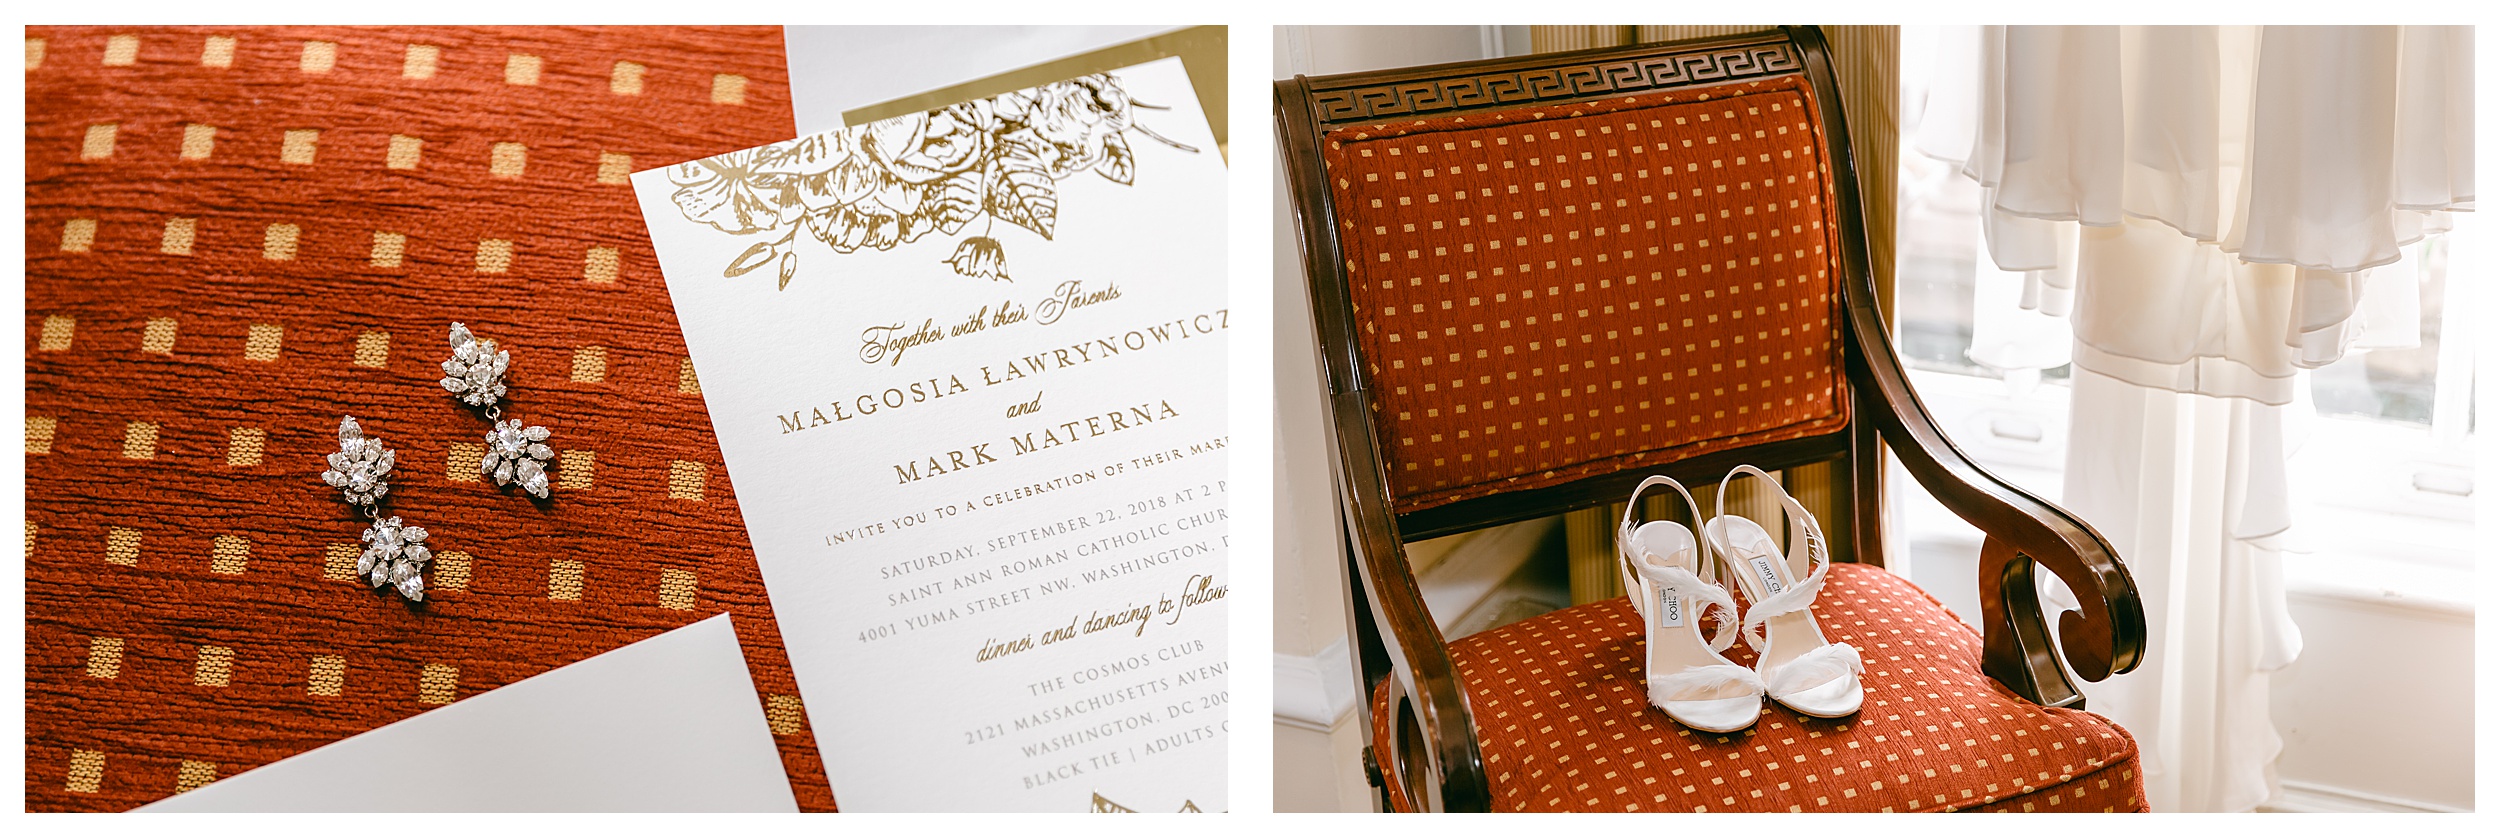 wedding invitations and jimmy choo shoes detail shots